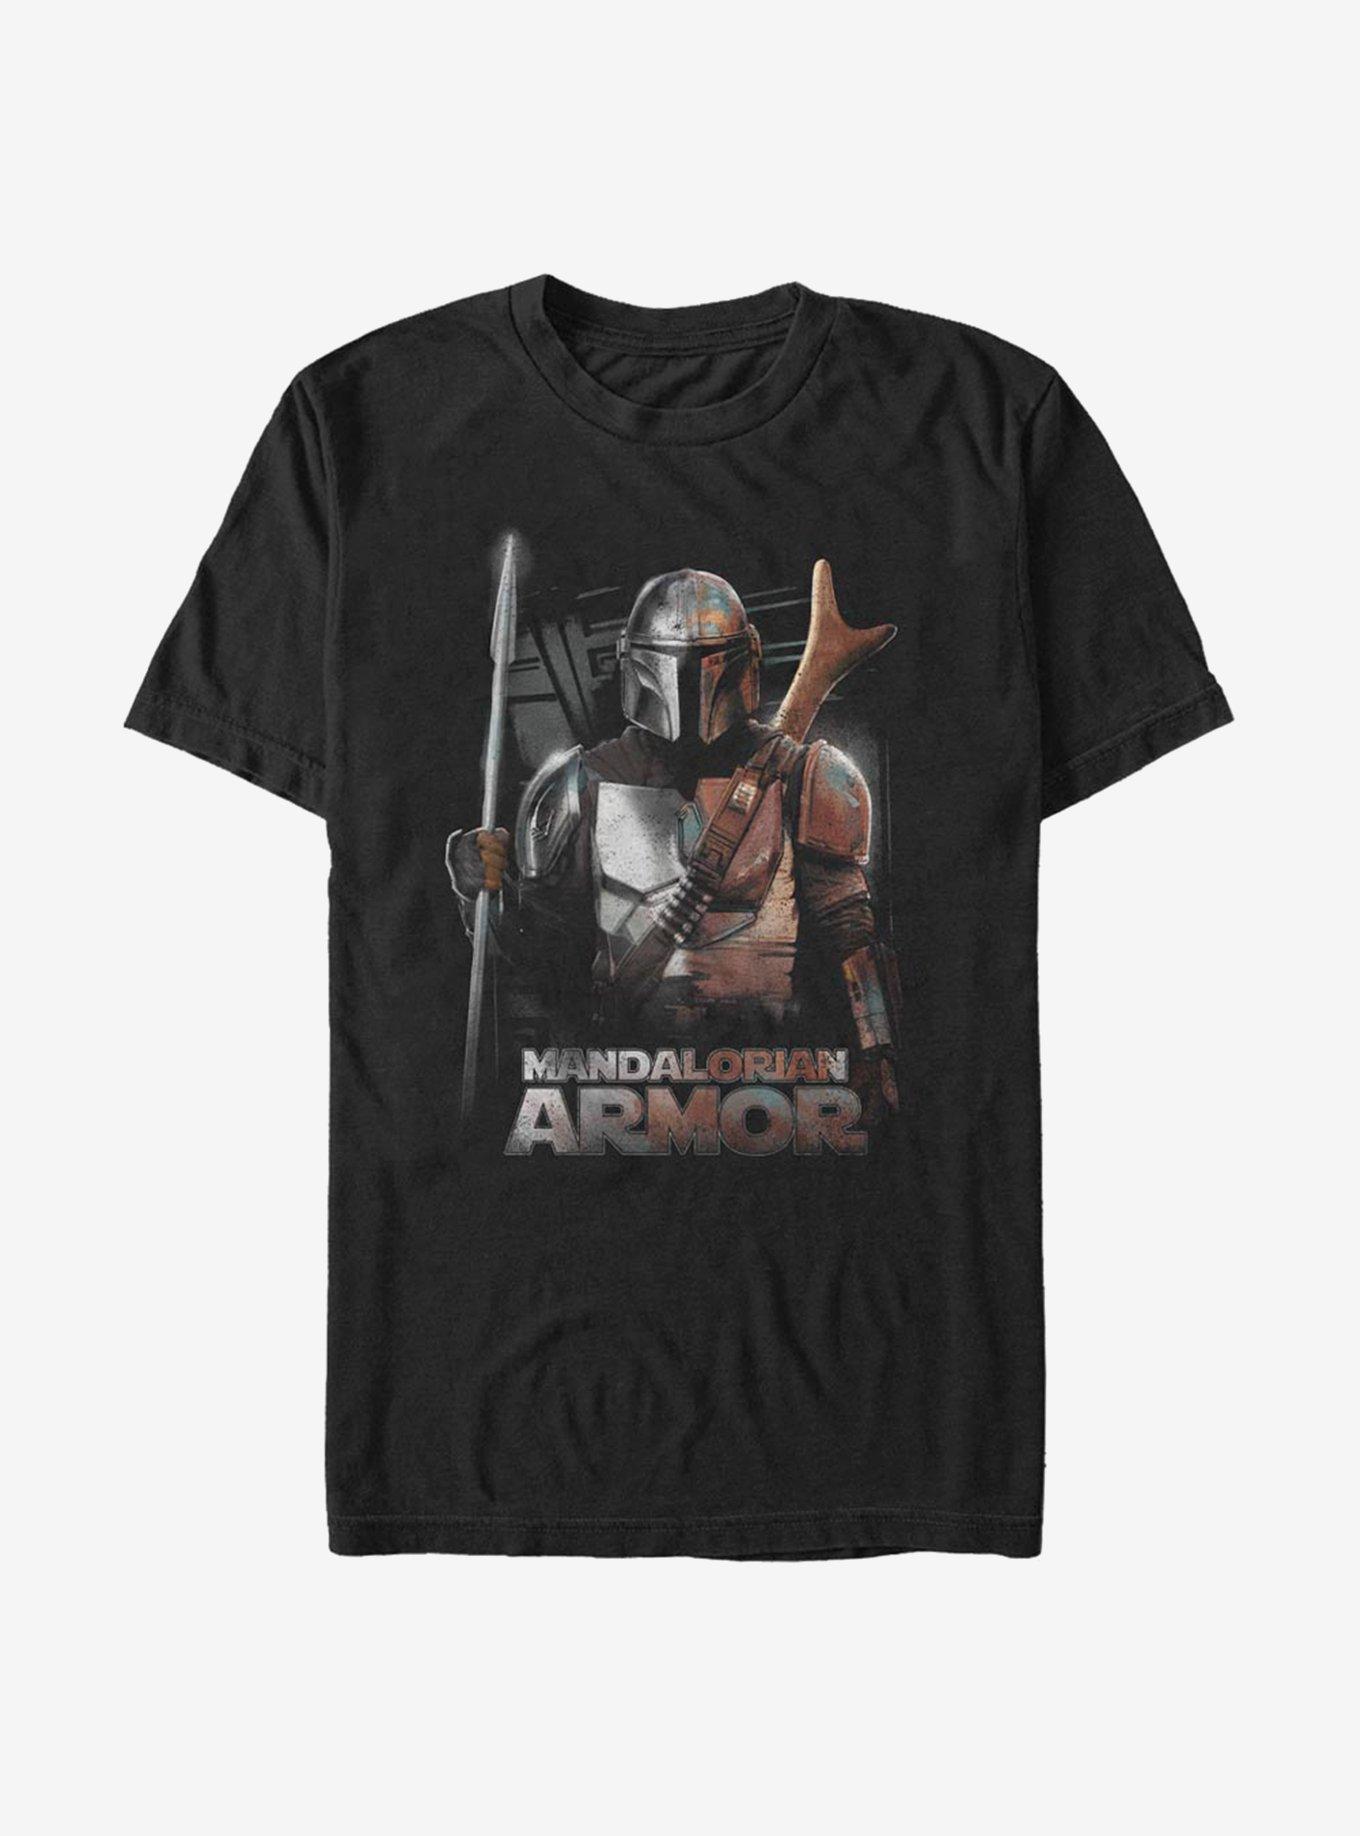 Star Wars The Mandalorian Season 2 Armor T-Shirt, BLACK, hi-res